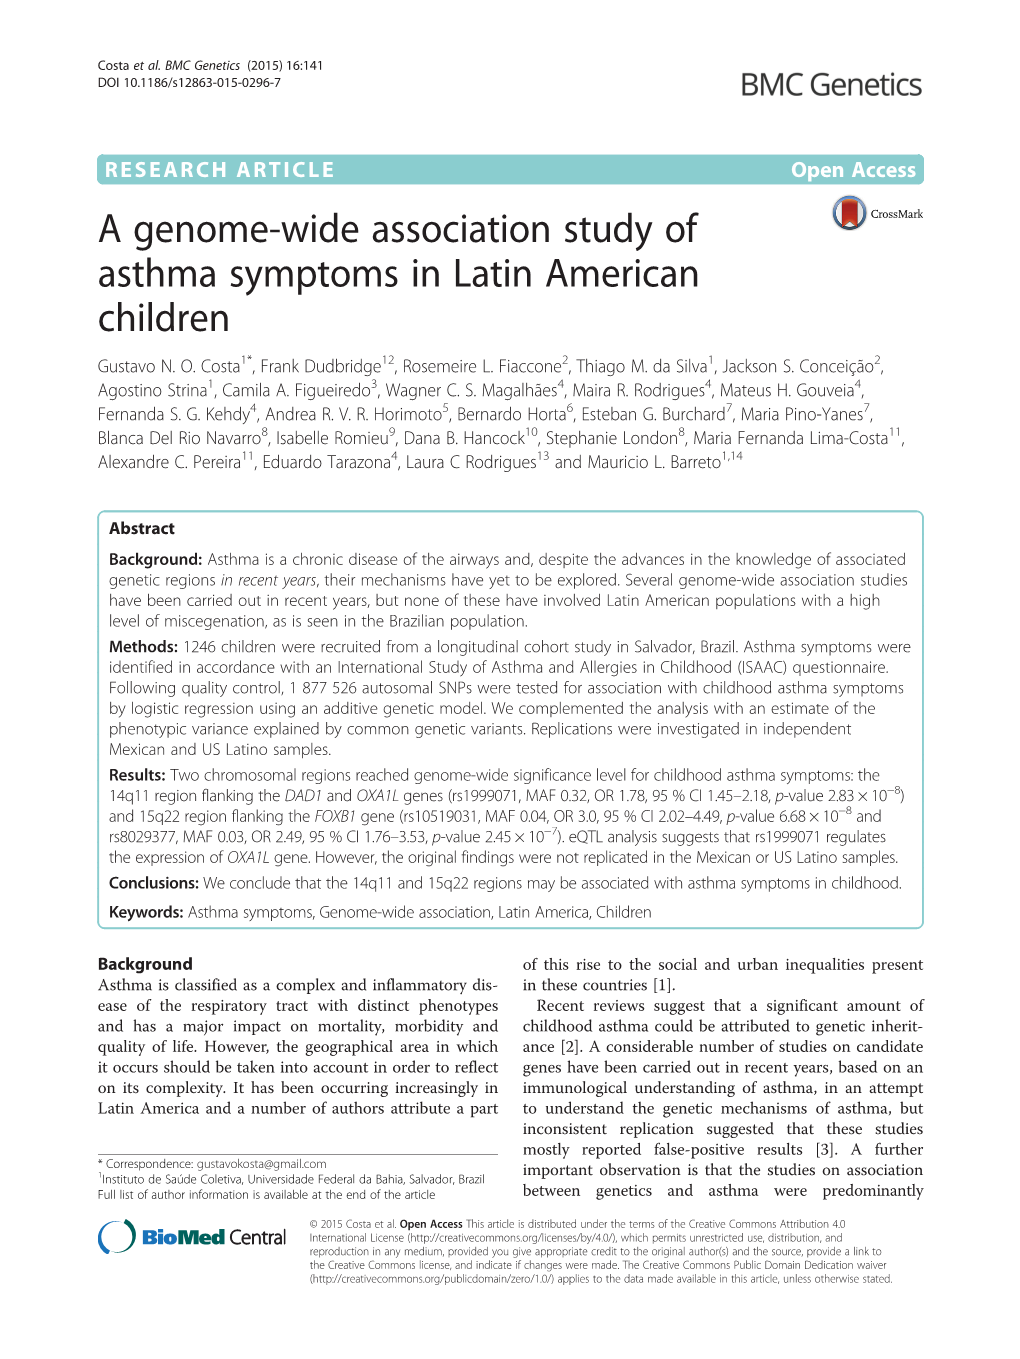 A Genome-Wide Association Study of Asthma Symptoms in Latin American Children Gustavo N